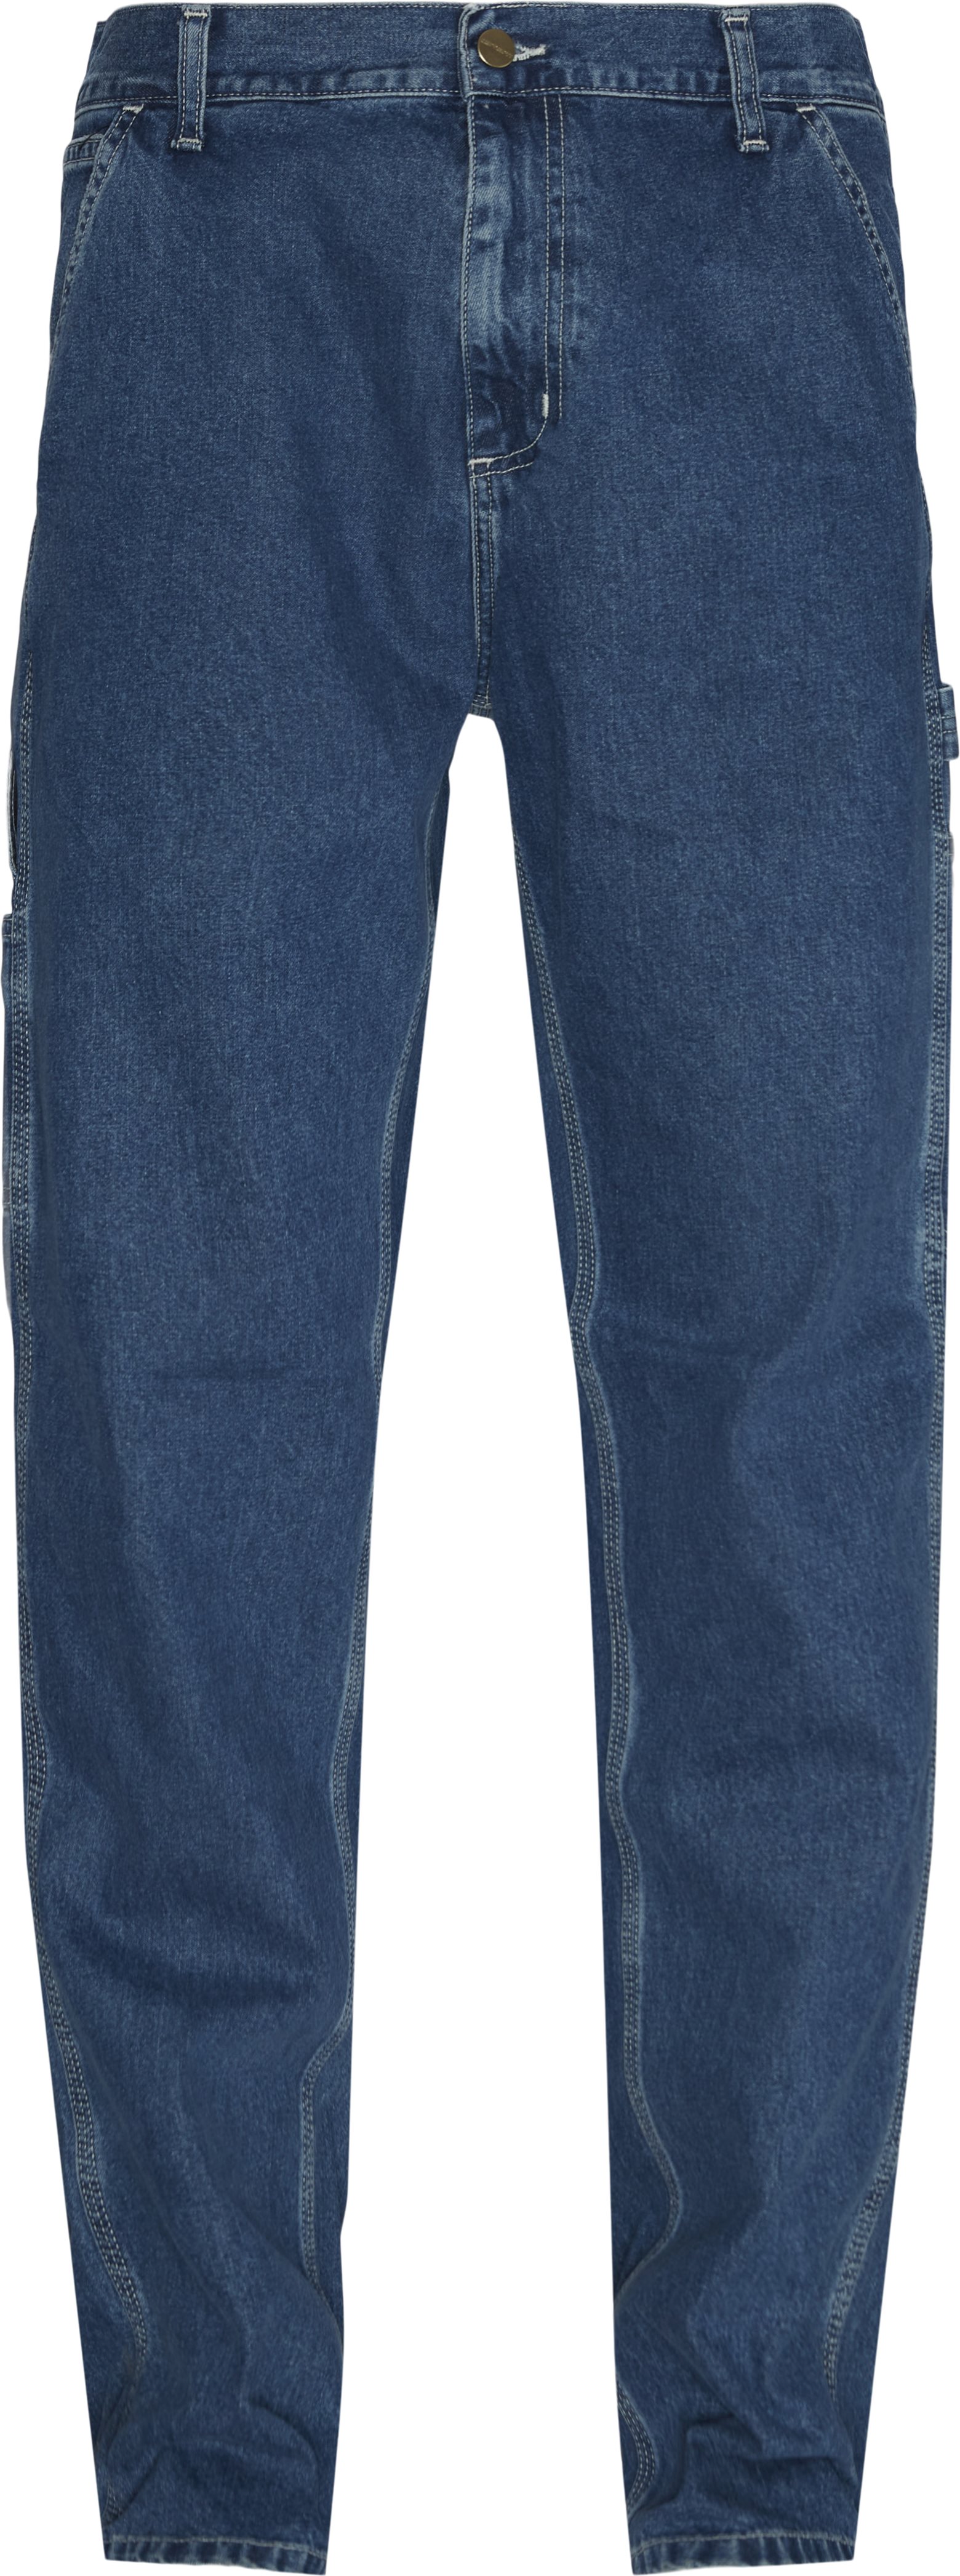 Carhartt WIP Jeans RUCK SINGLE KNEE I022948.01.06 Denim